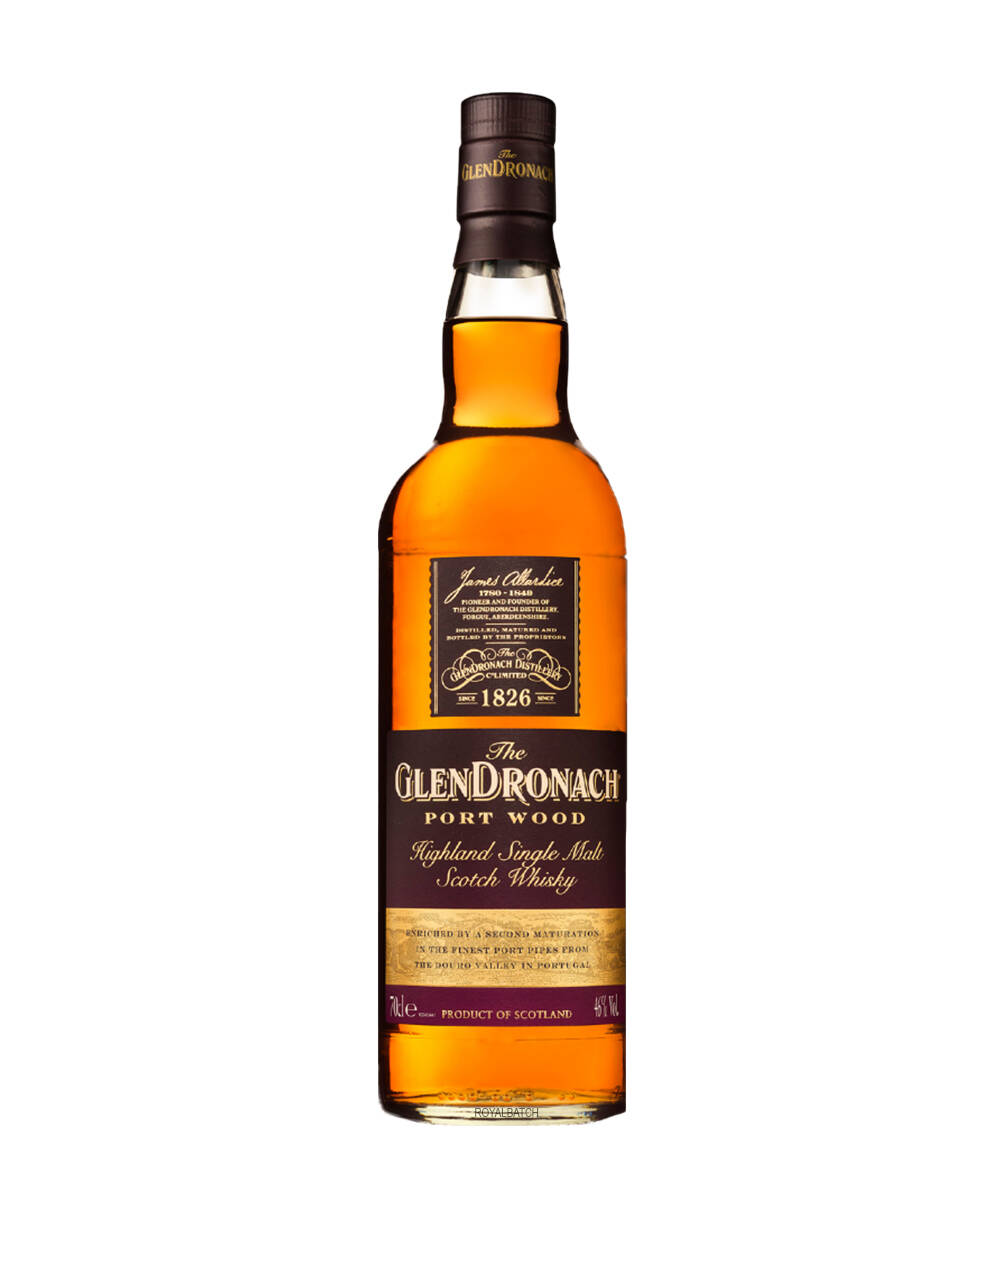 The Glendronach Port Wood Edition Single Malt Scotch Whisky